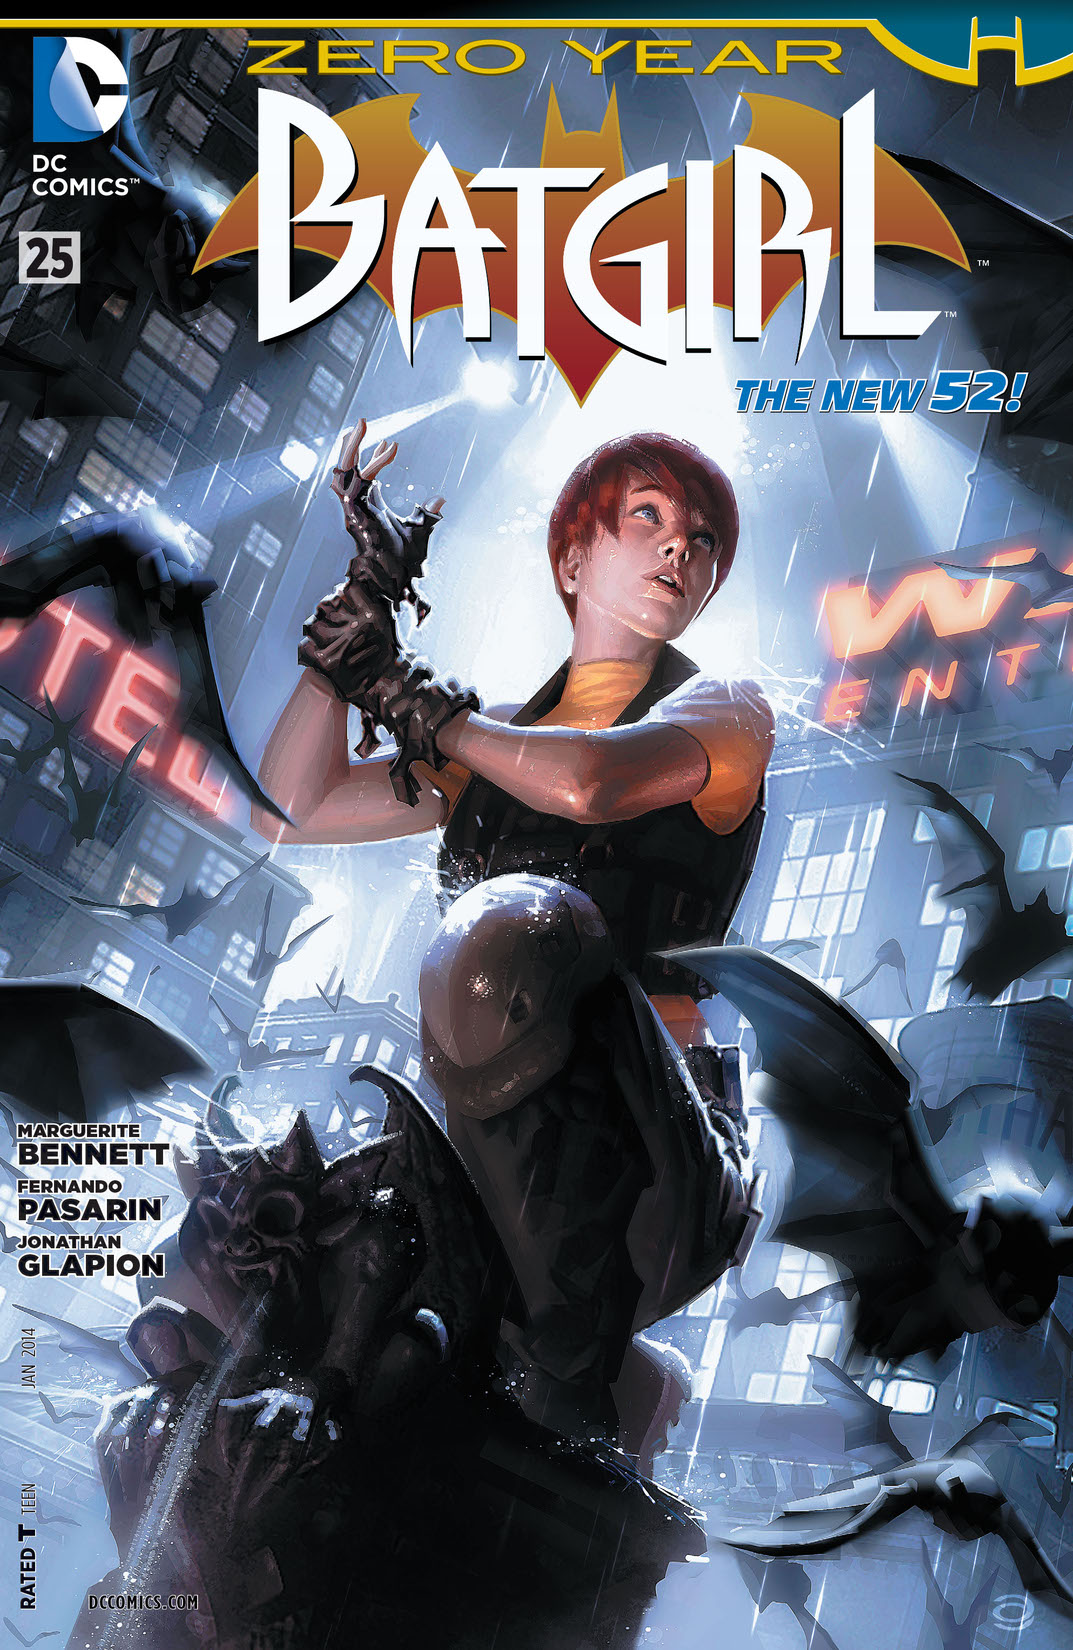 Batgirl (2011-) #25 preview images